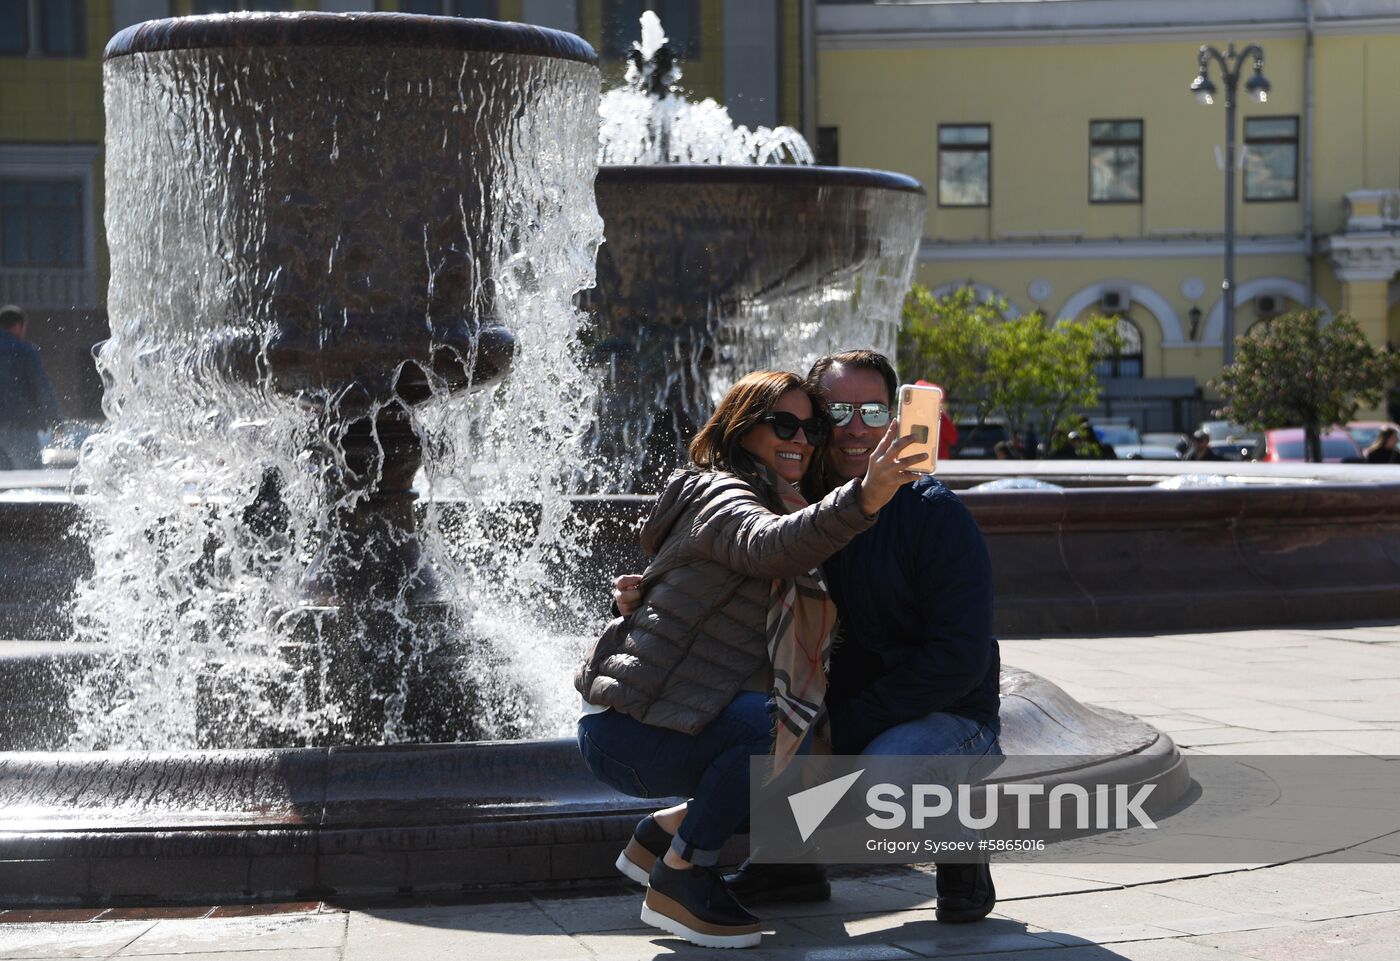 Russia Fountain Season